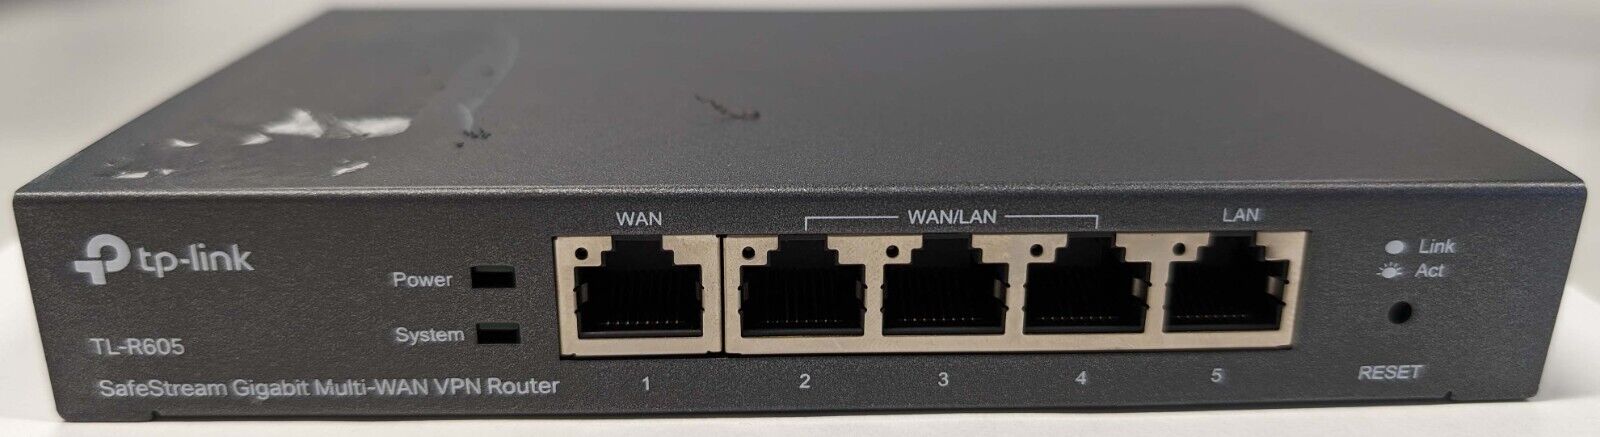 TP-LINK TL-R605 SafeStream Gigabit Multi-WAN VPN Router - NO POWER SUPPLY